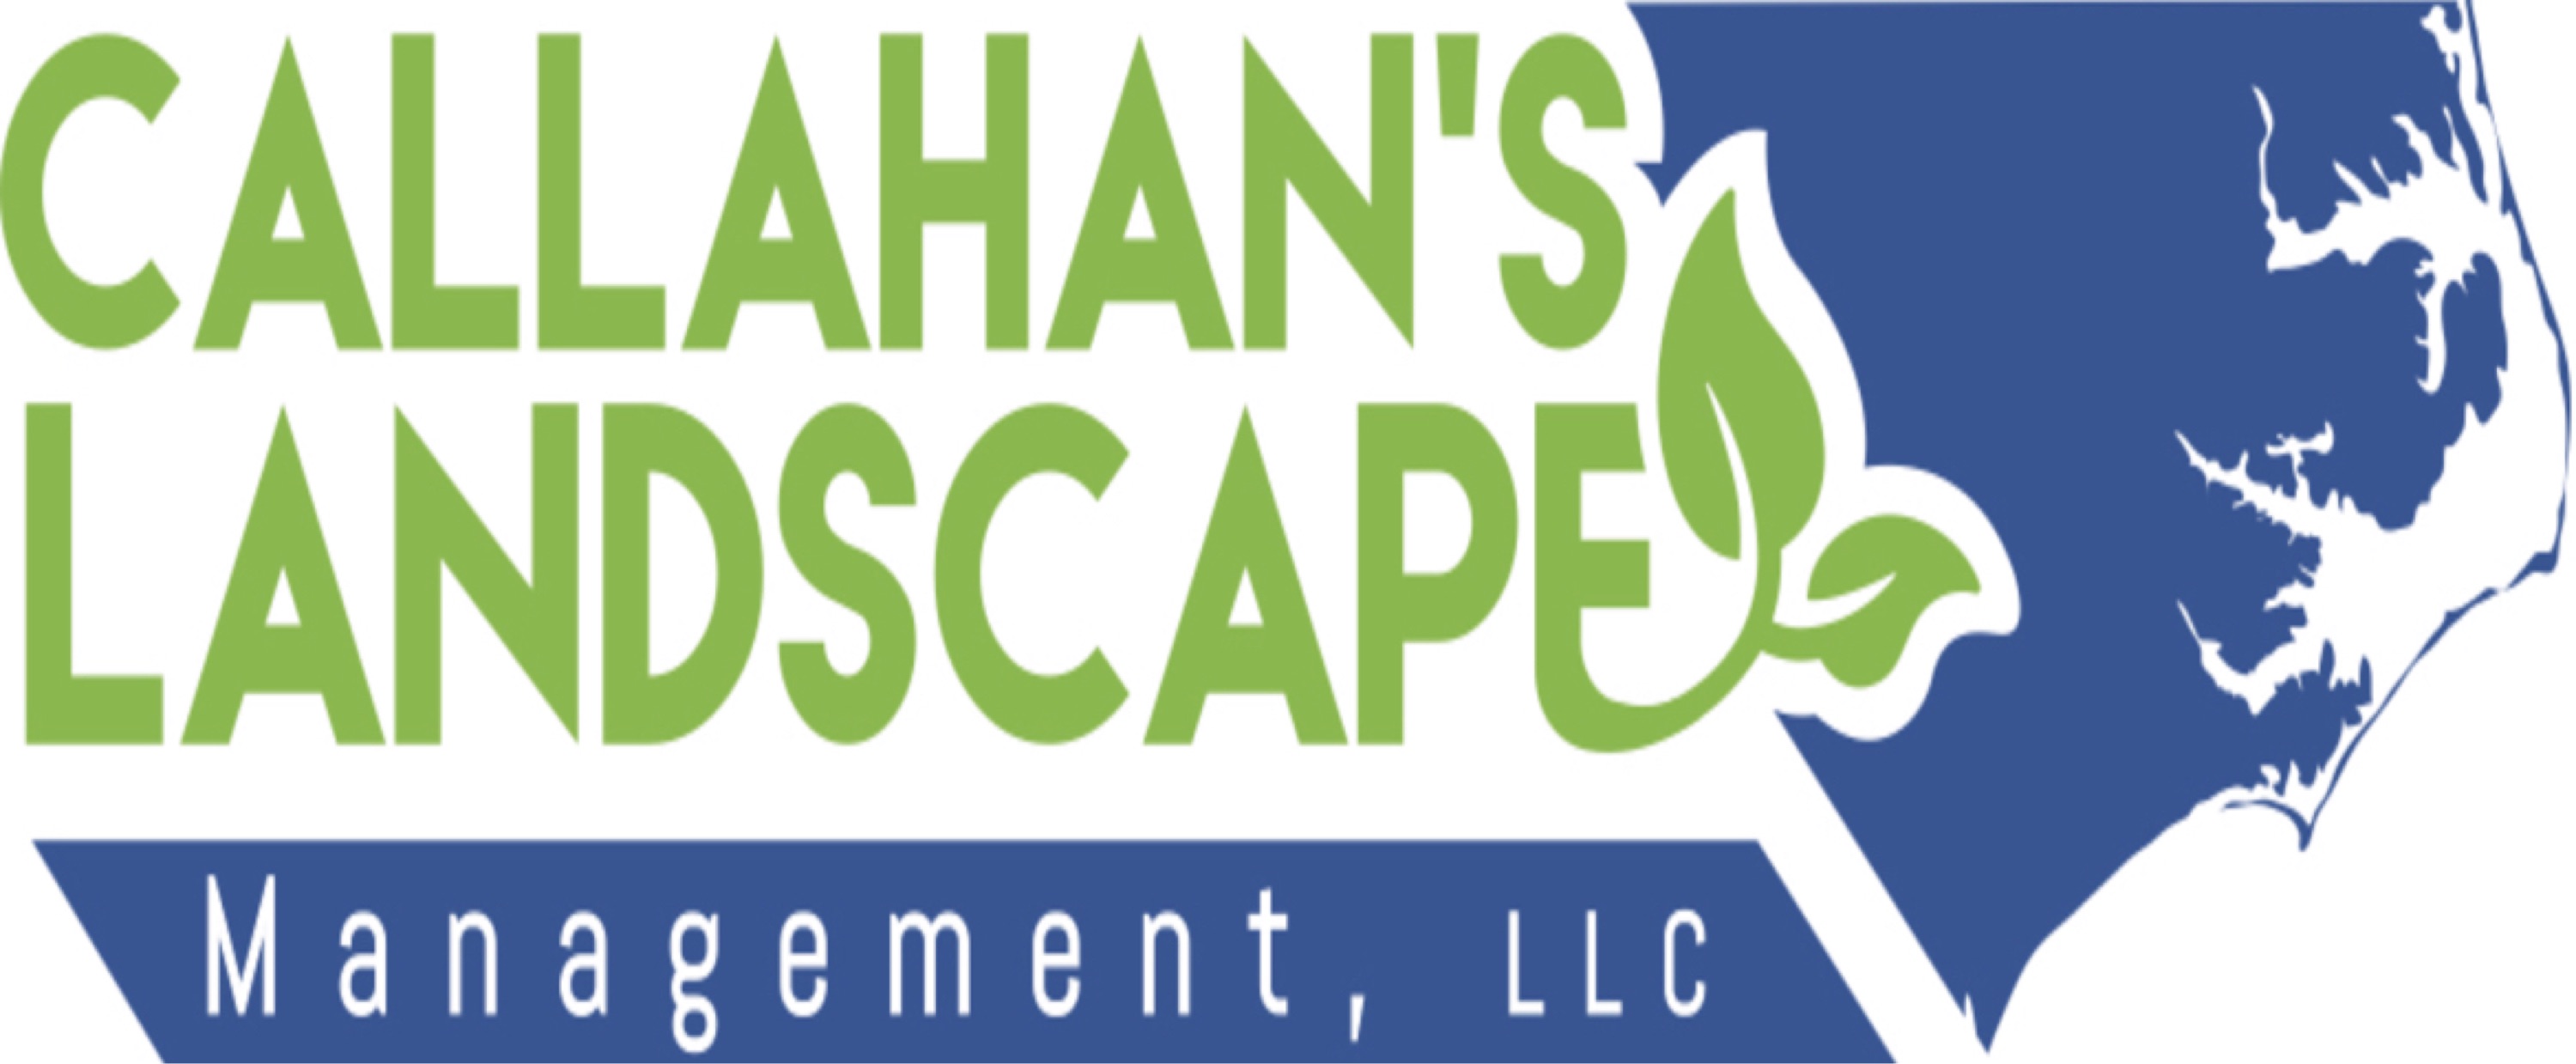 Callahan's Landscape Management, LLC Logo